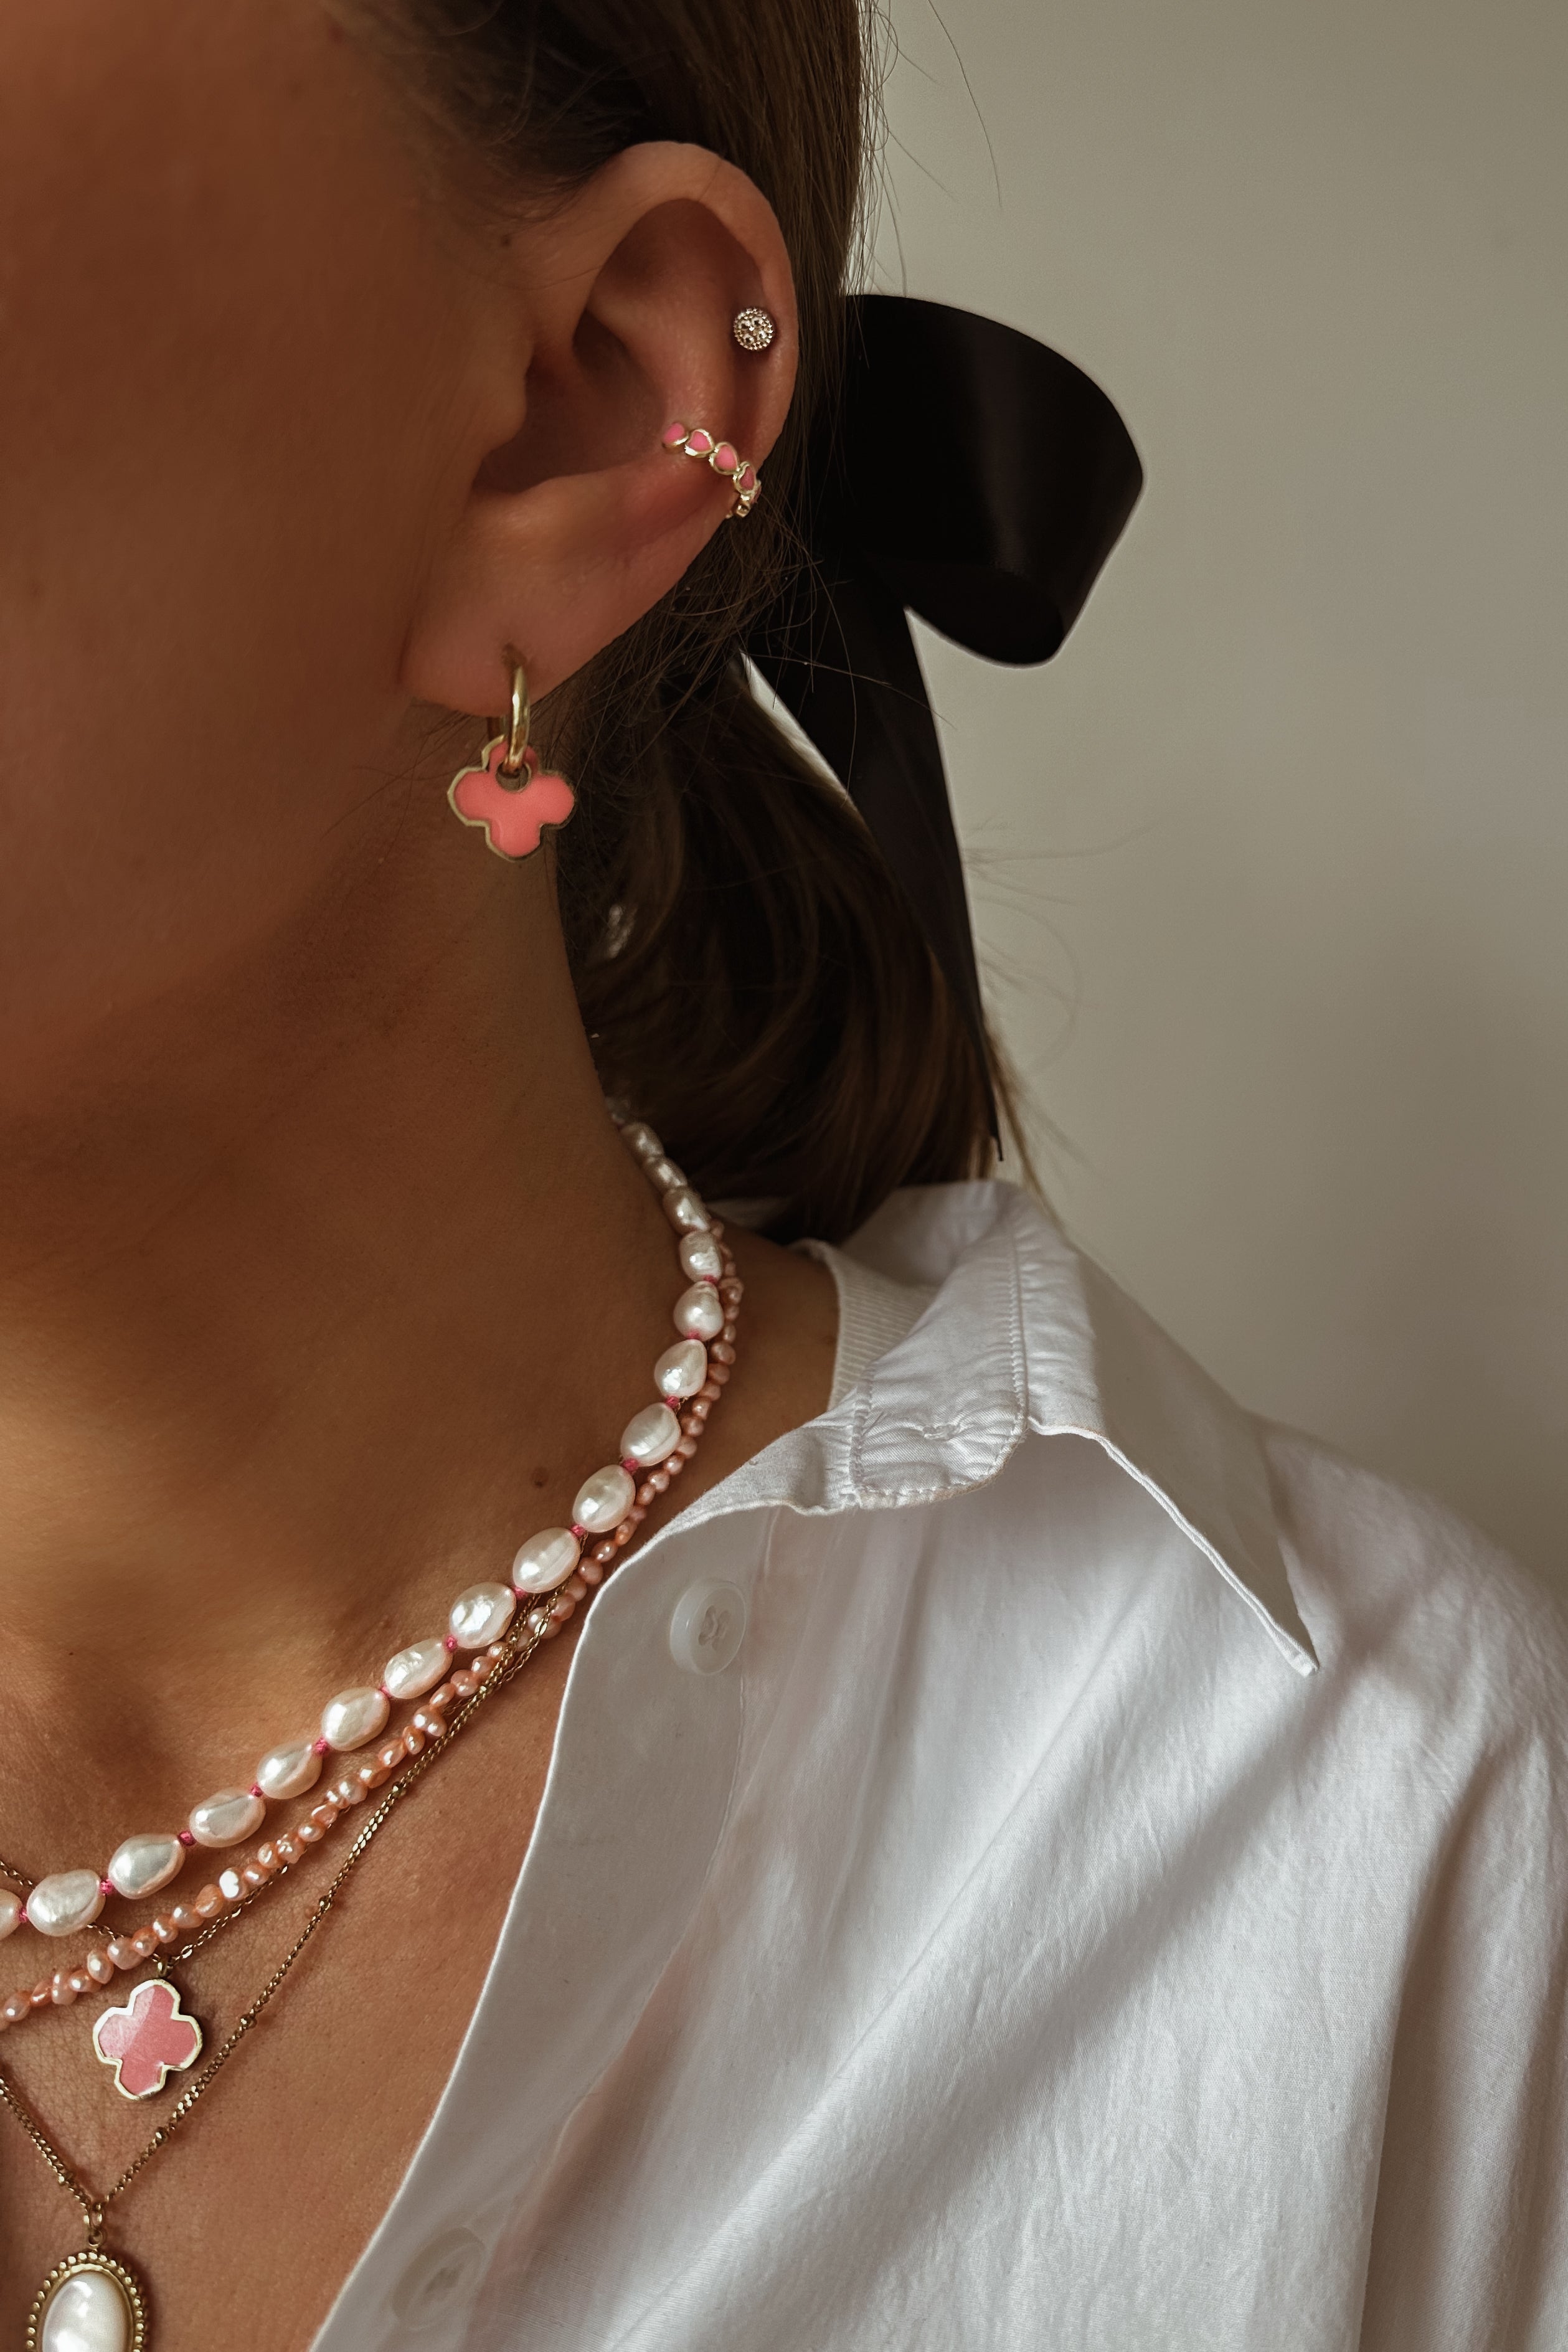 Wyatt Ear Cuff - Boutique Minimaliste has waterproof, durable, elegant and vintage inspired jewelry